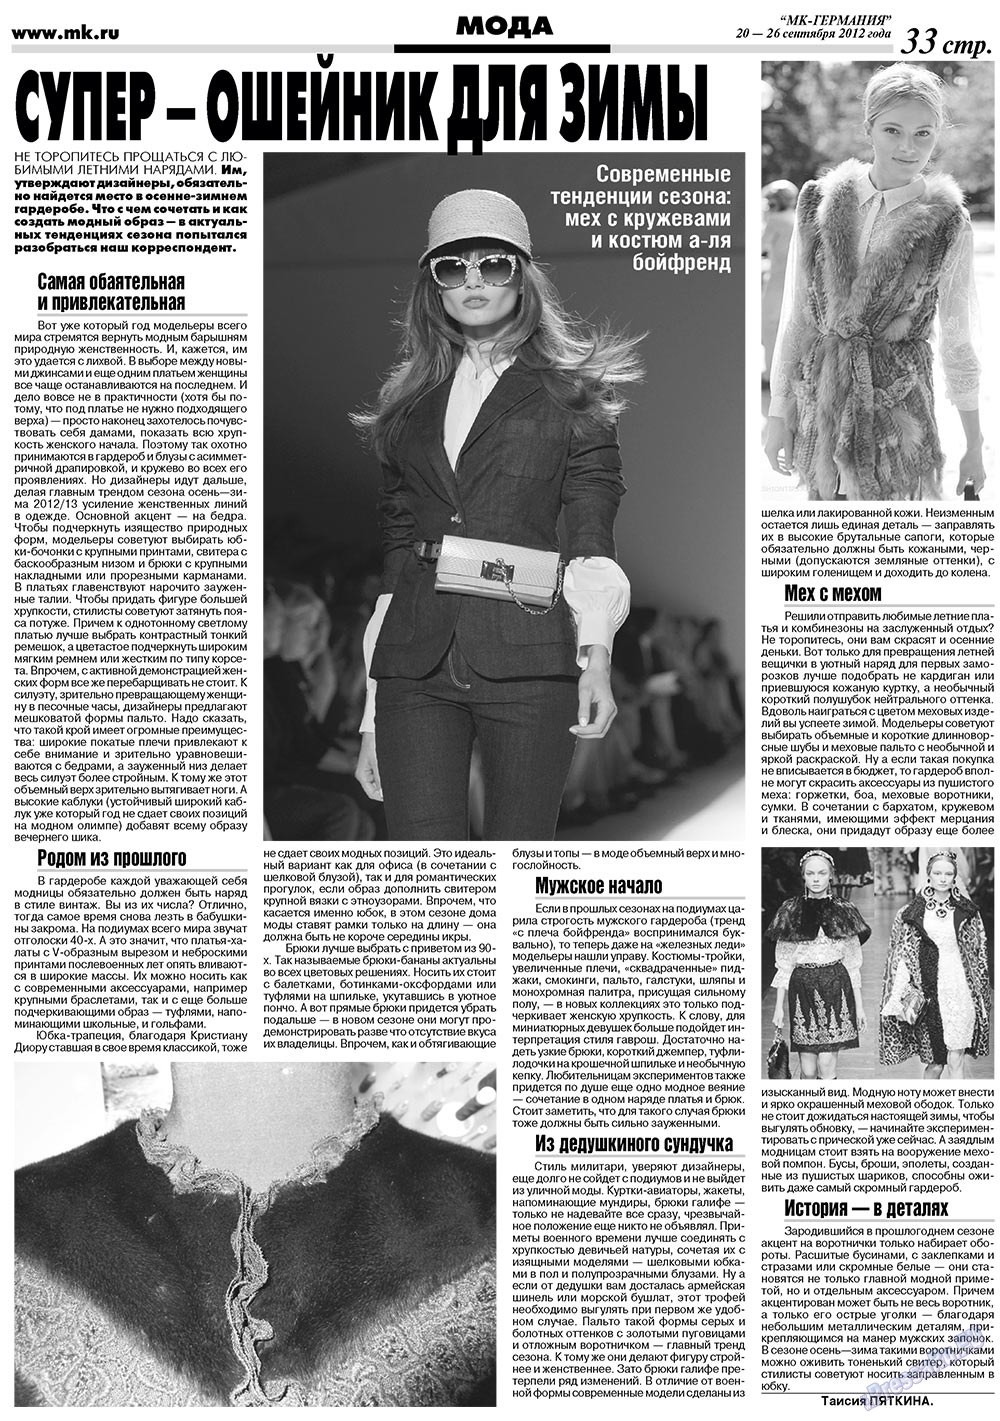 МК-Германия, газета. 2012 №38 стр.19